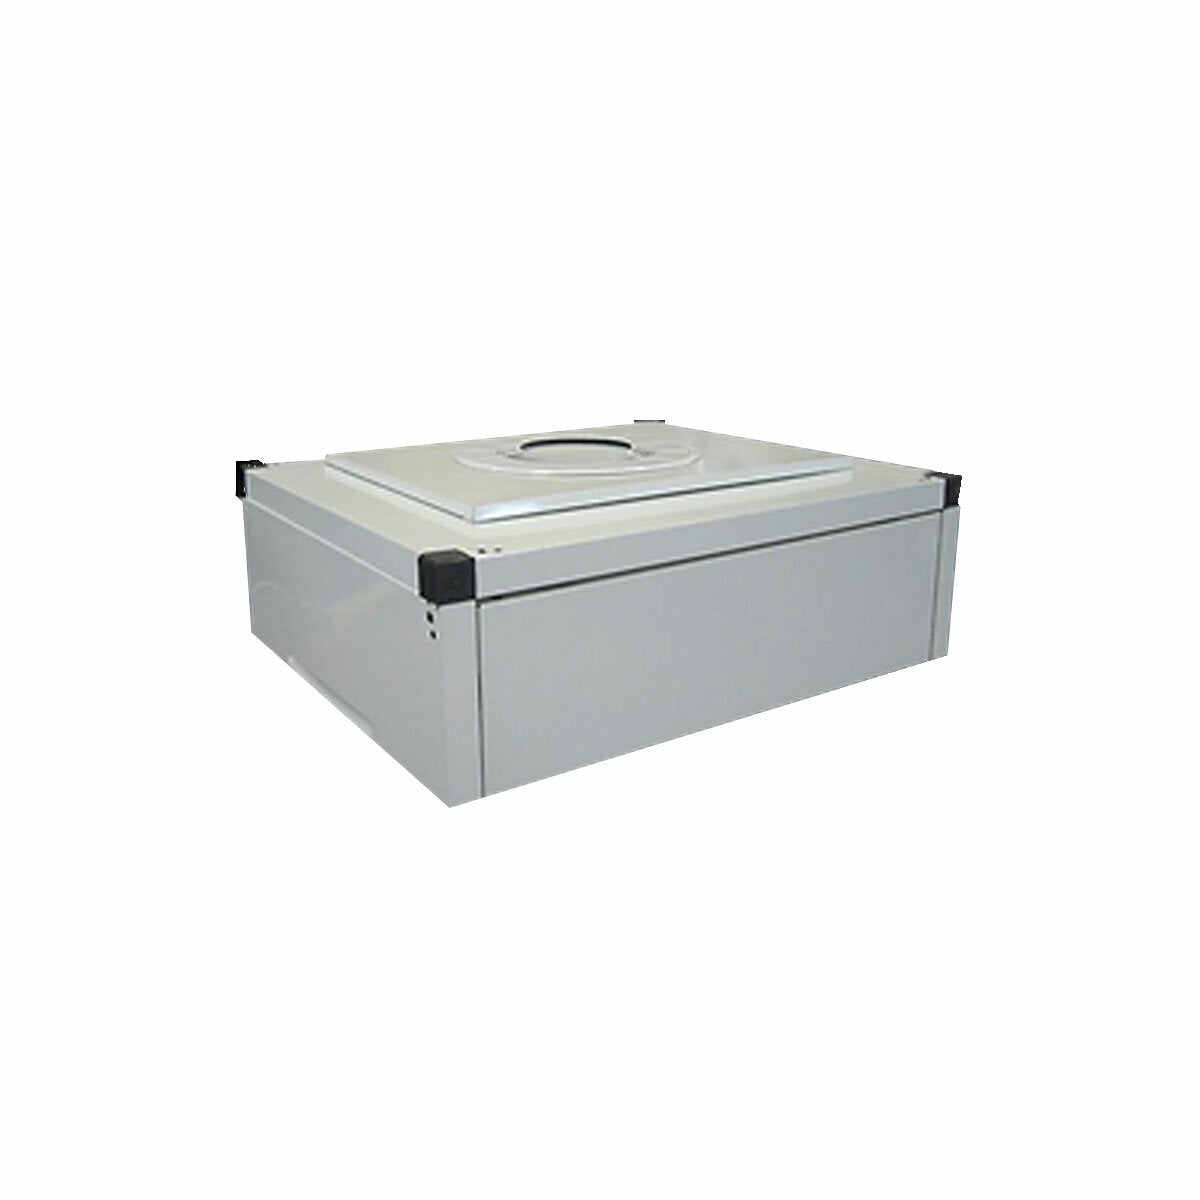 White universal water heater cover boiler cover box H 85 cm - W 50 cm - D 32 cm